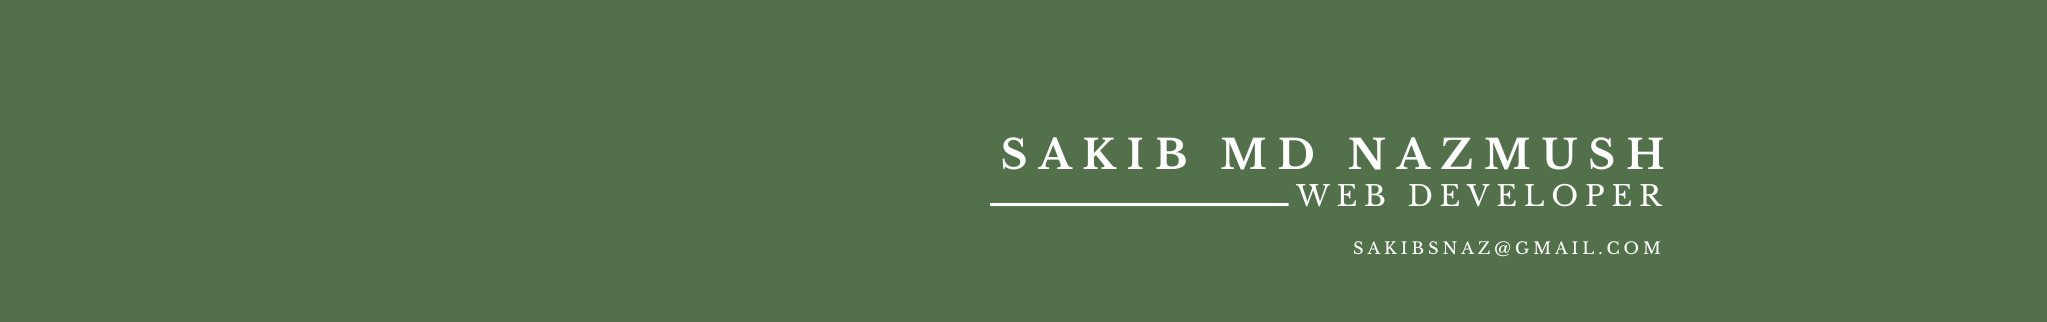 Banner de perfil de Sakib MD Nazmush